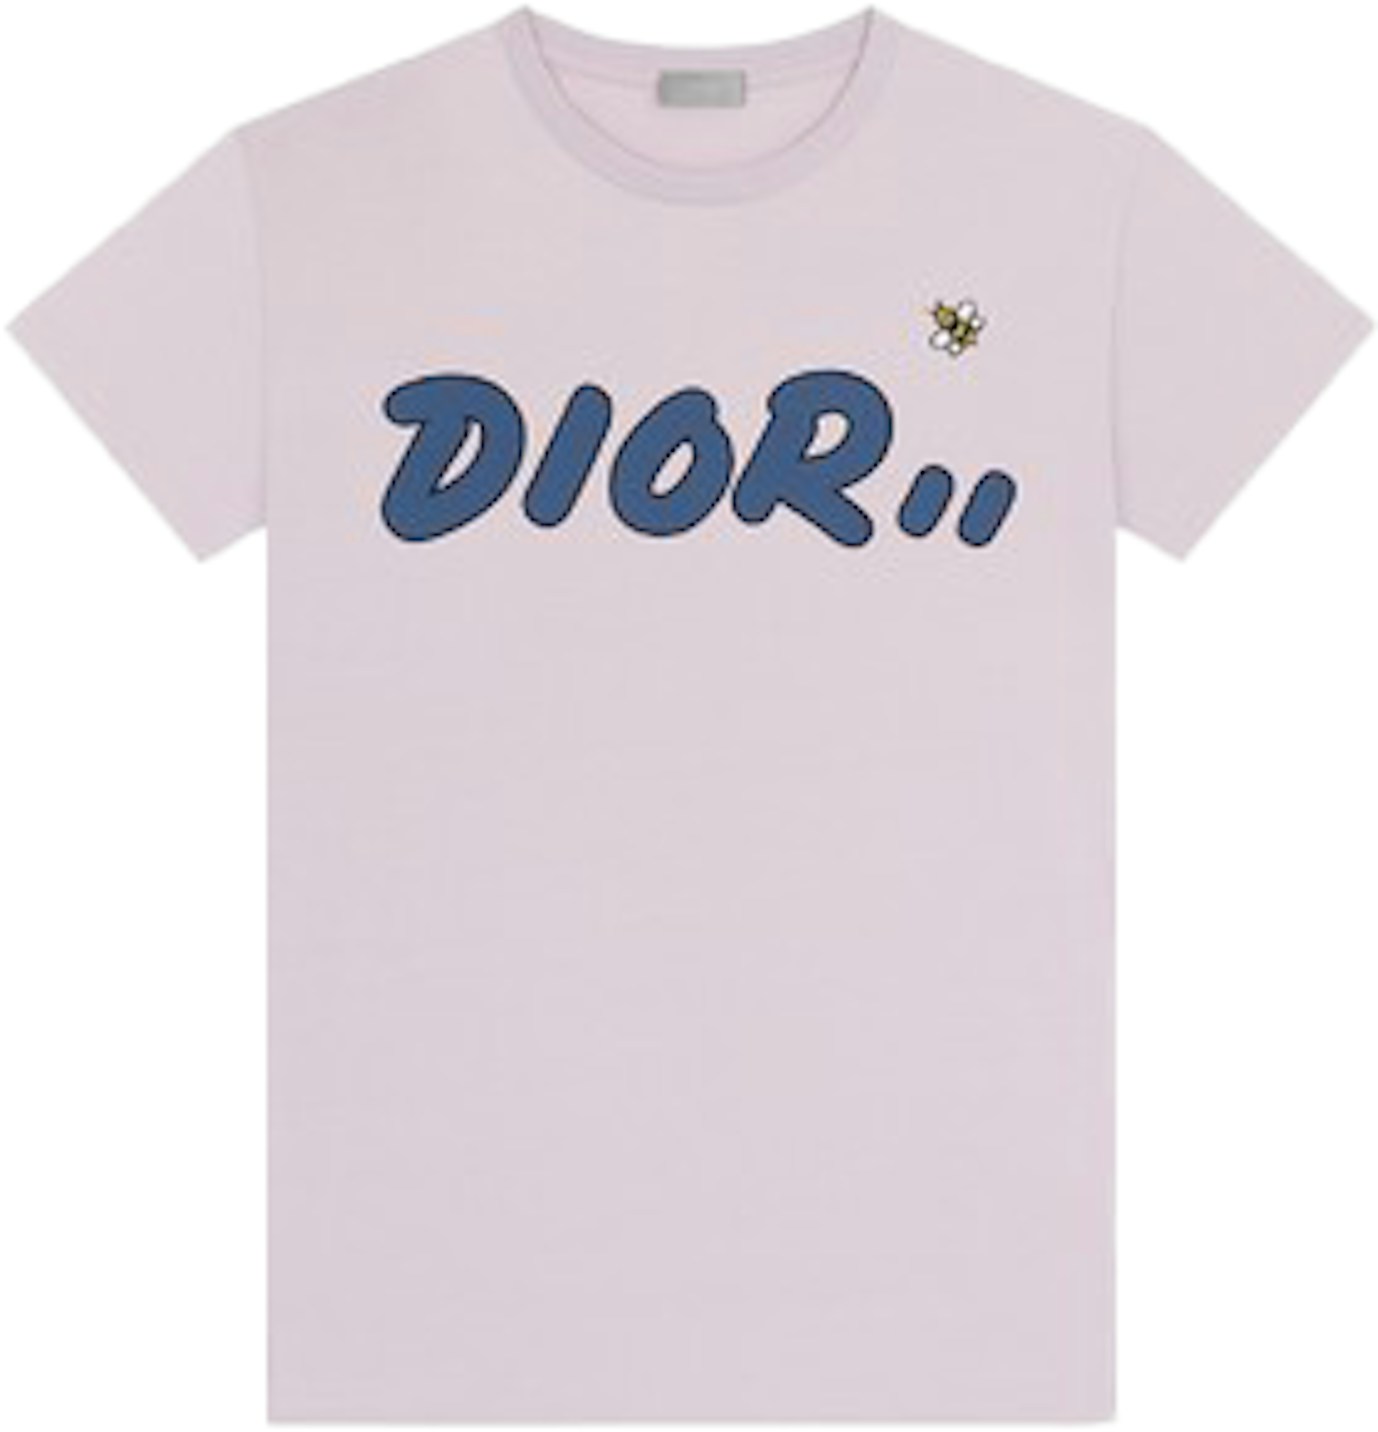 KAWS x Dior Logo T-Shirt Pink - SS19